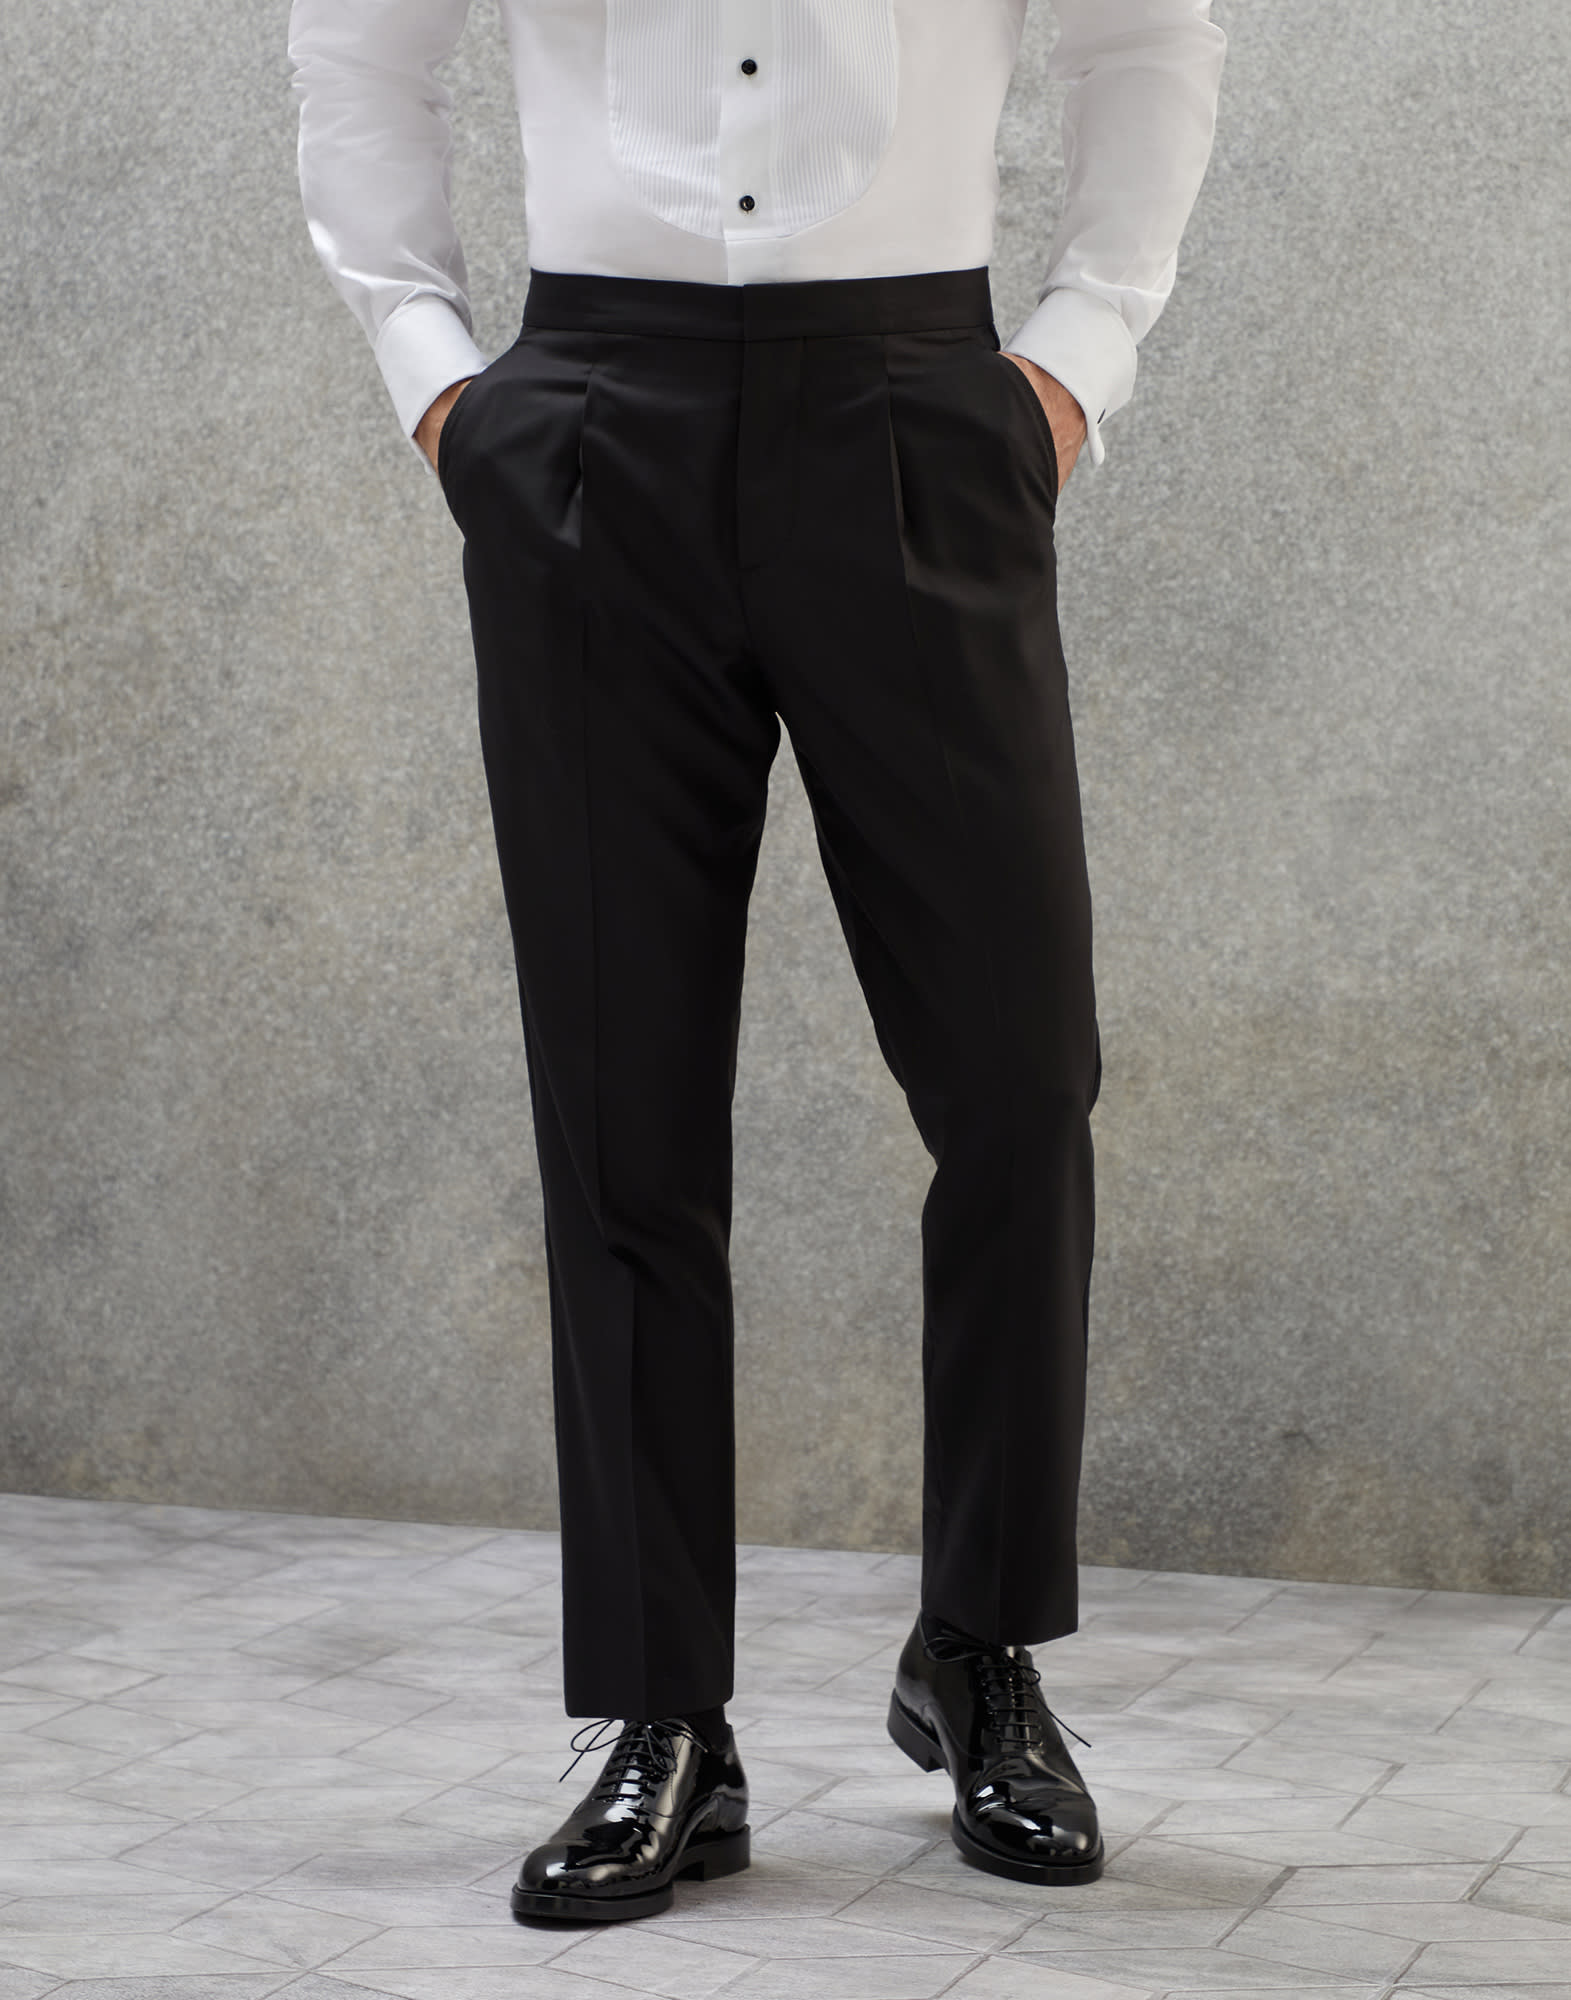 WHITE TUXEDO TROUSERS Pleated with satin leg stripe, most men's sizes  available | eBay